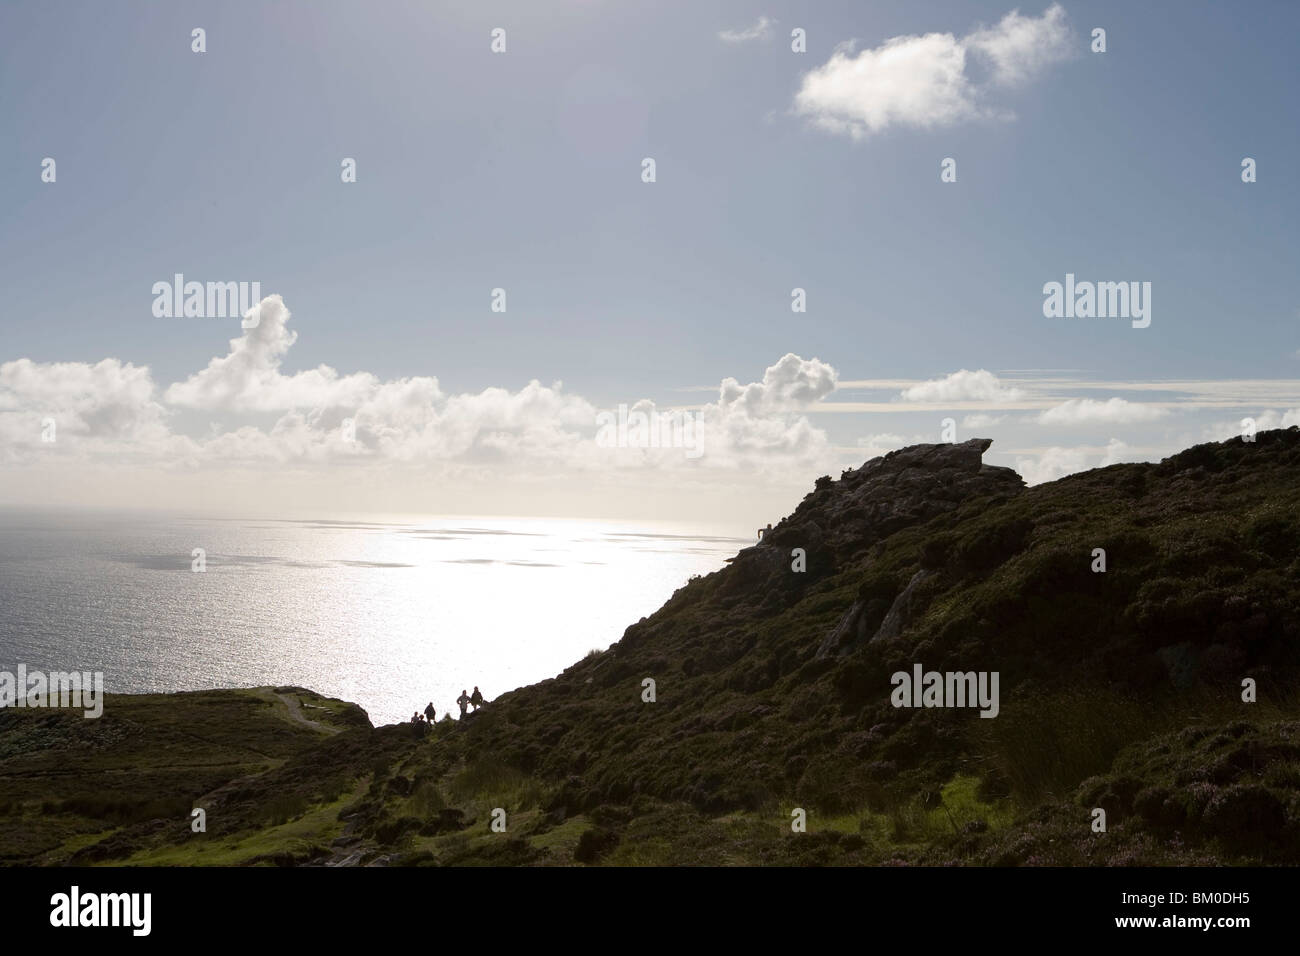 Hikers on One Man's Path, Slieve League Cliffs, Near Teelin, County Donegal, Ireland Stock Photo